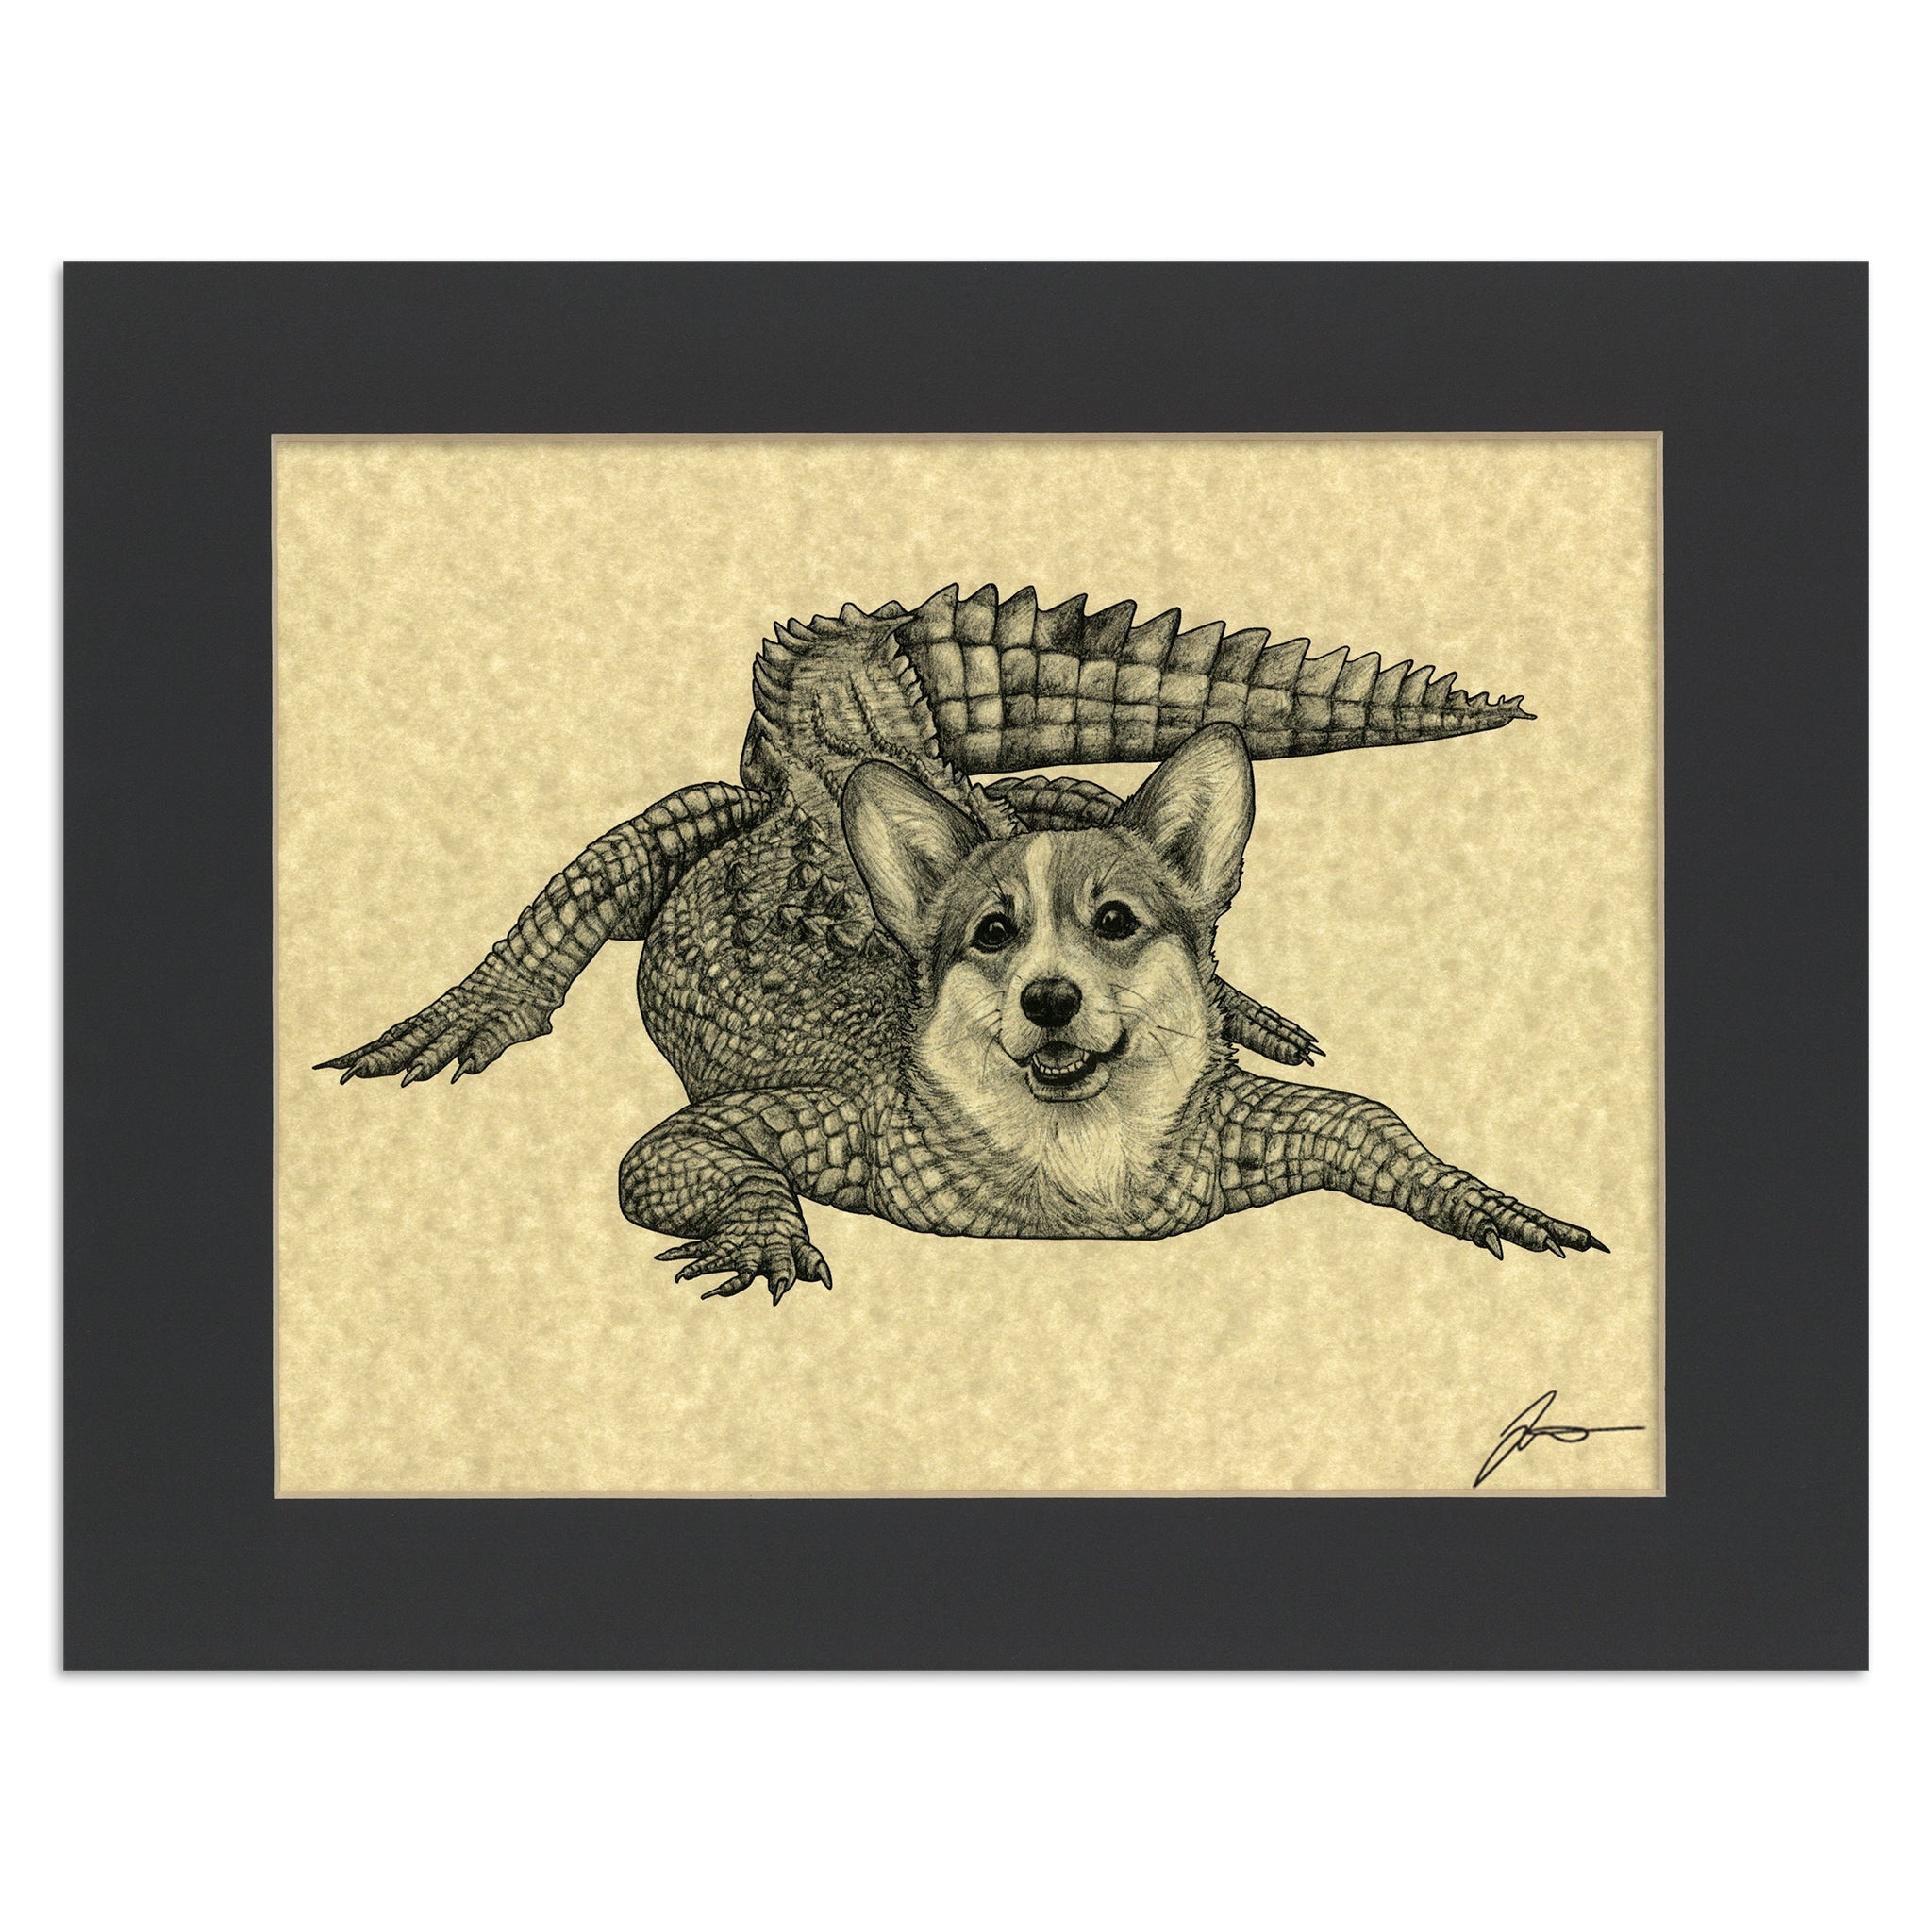 Corgidile | Corgi + Crocodile Hybrid Animal | 11x14" Parchment Print